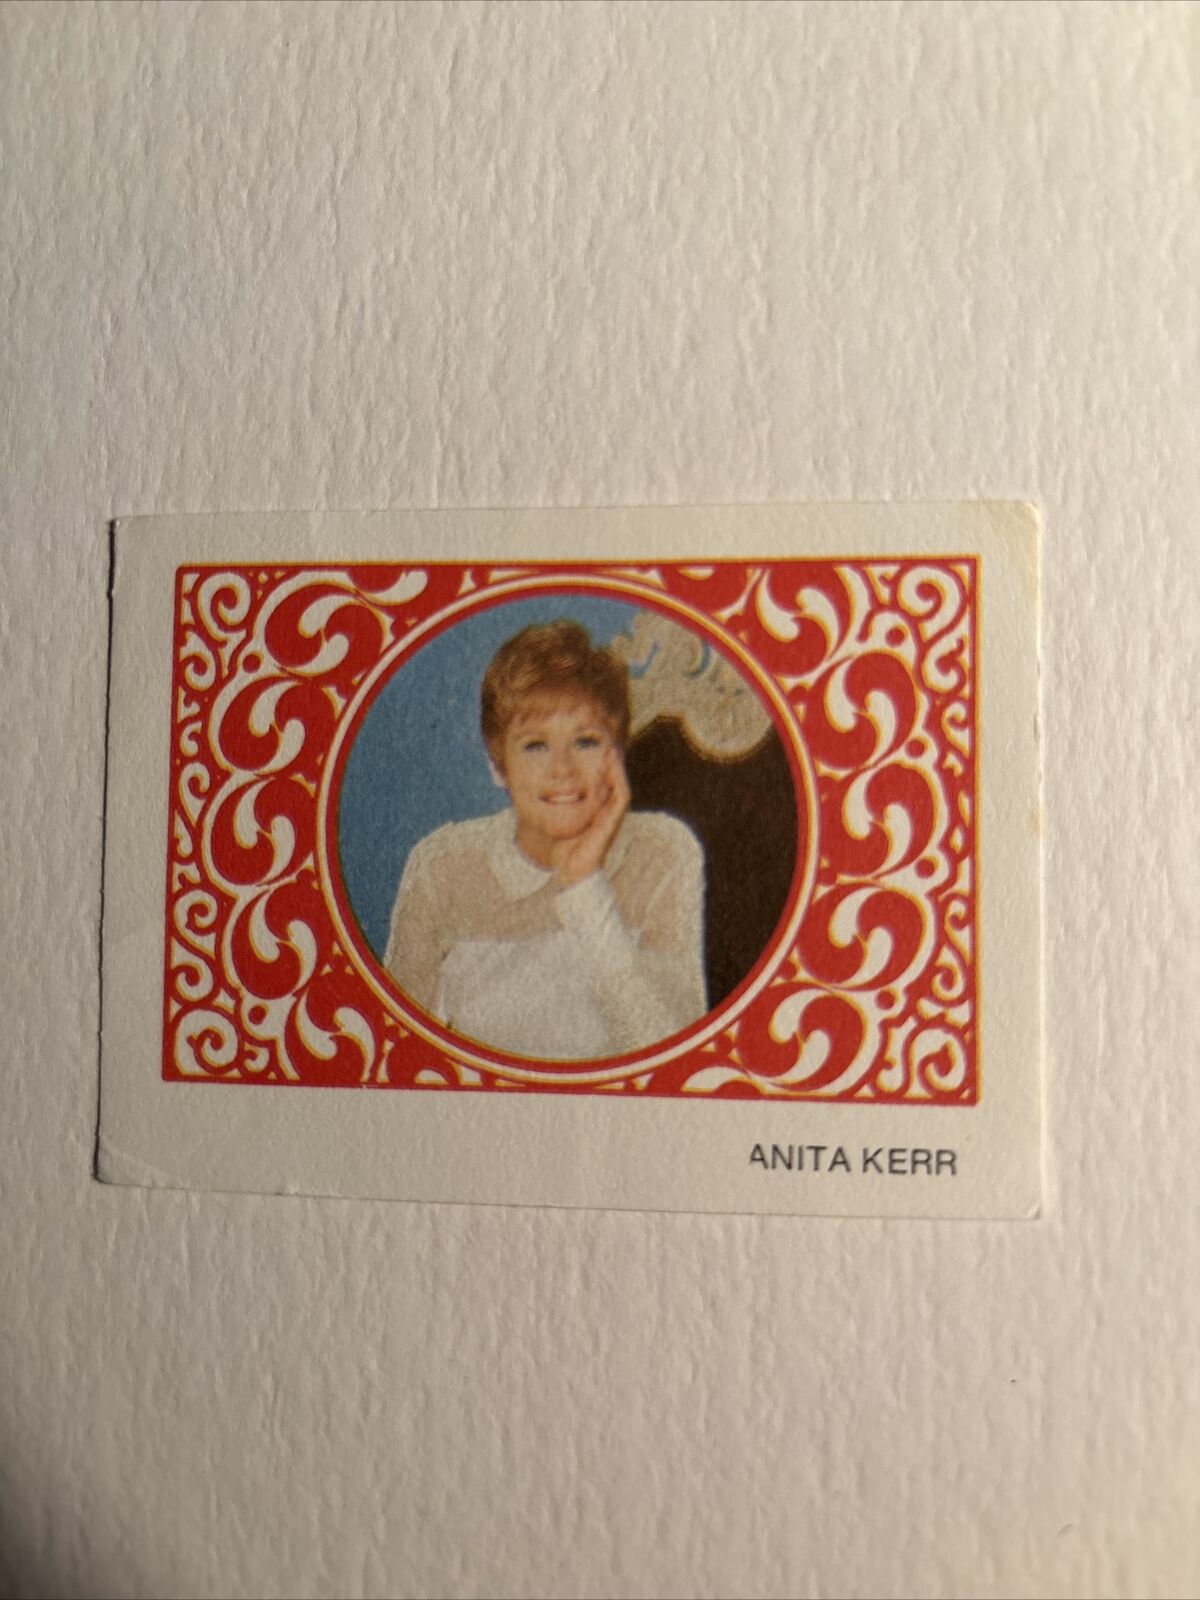 1972 Monty Top Pop Star Card Holland very scarce ANITA KERR